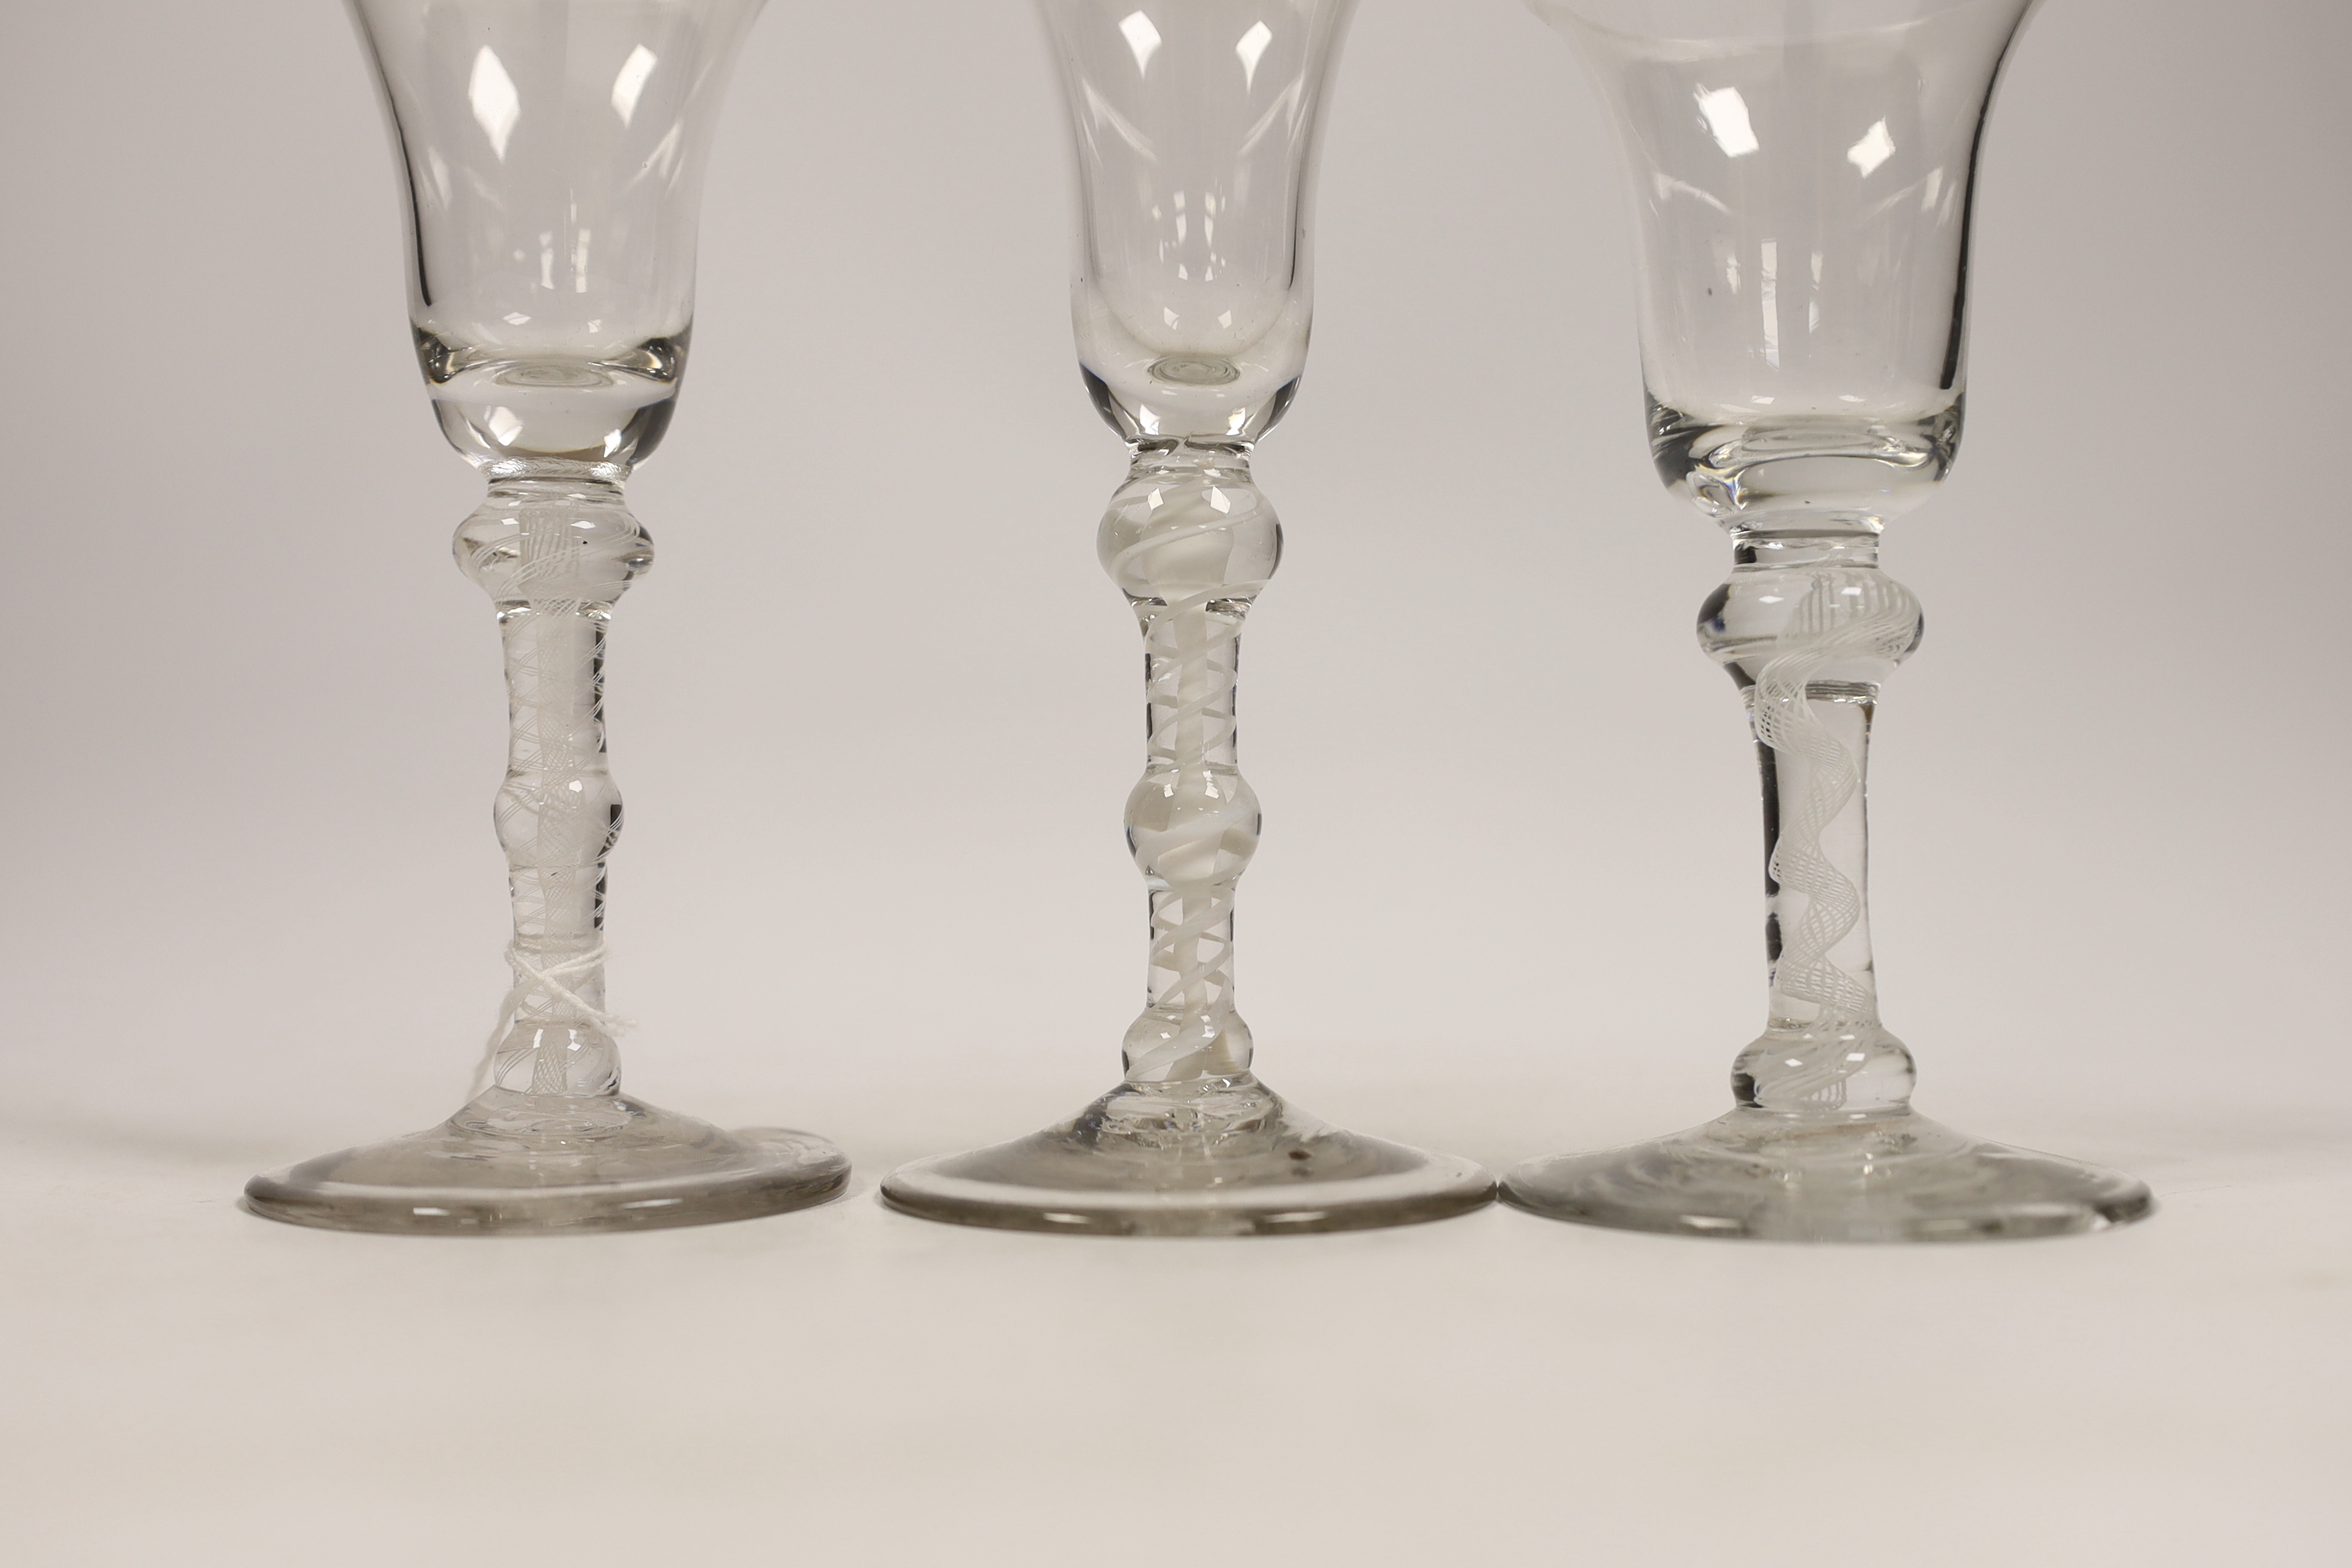 Three George III DSOT stem wine glasses, c.1760, largest 17cm high